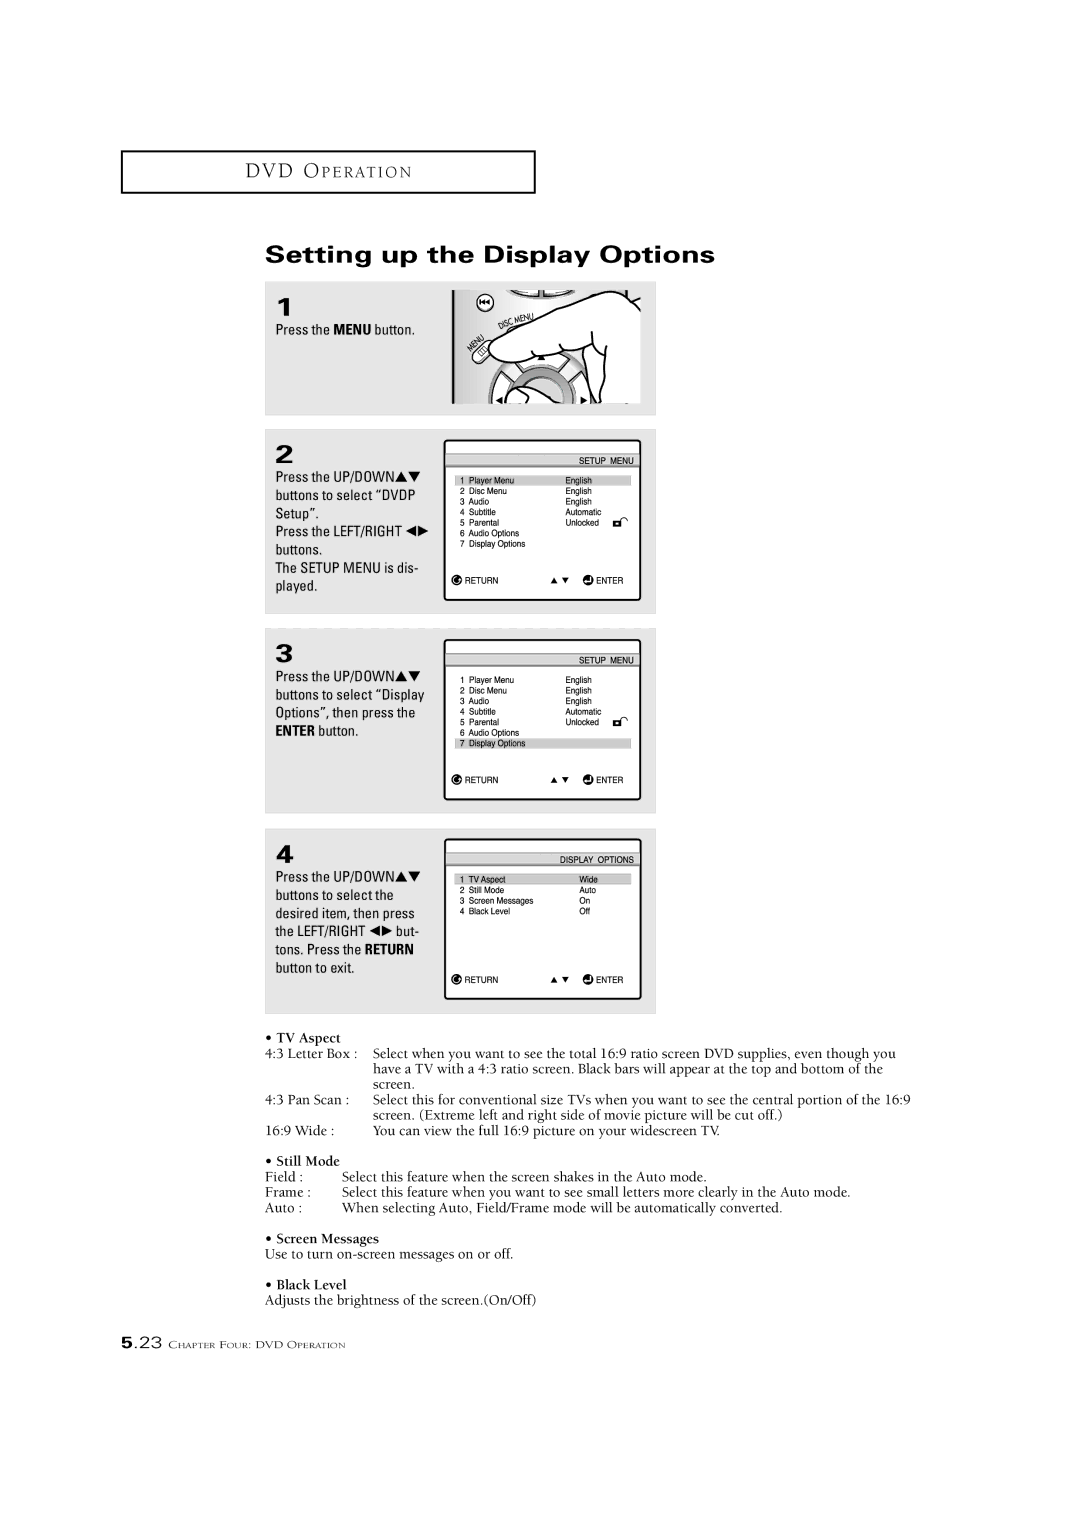 Samsung CSN2077DV manual Setting up the Display Options, TV Aspect 